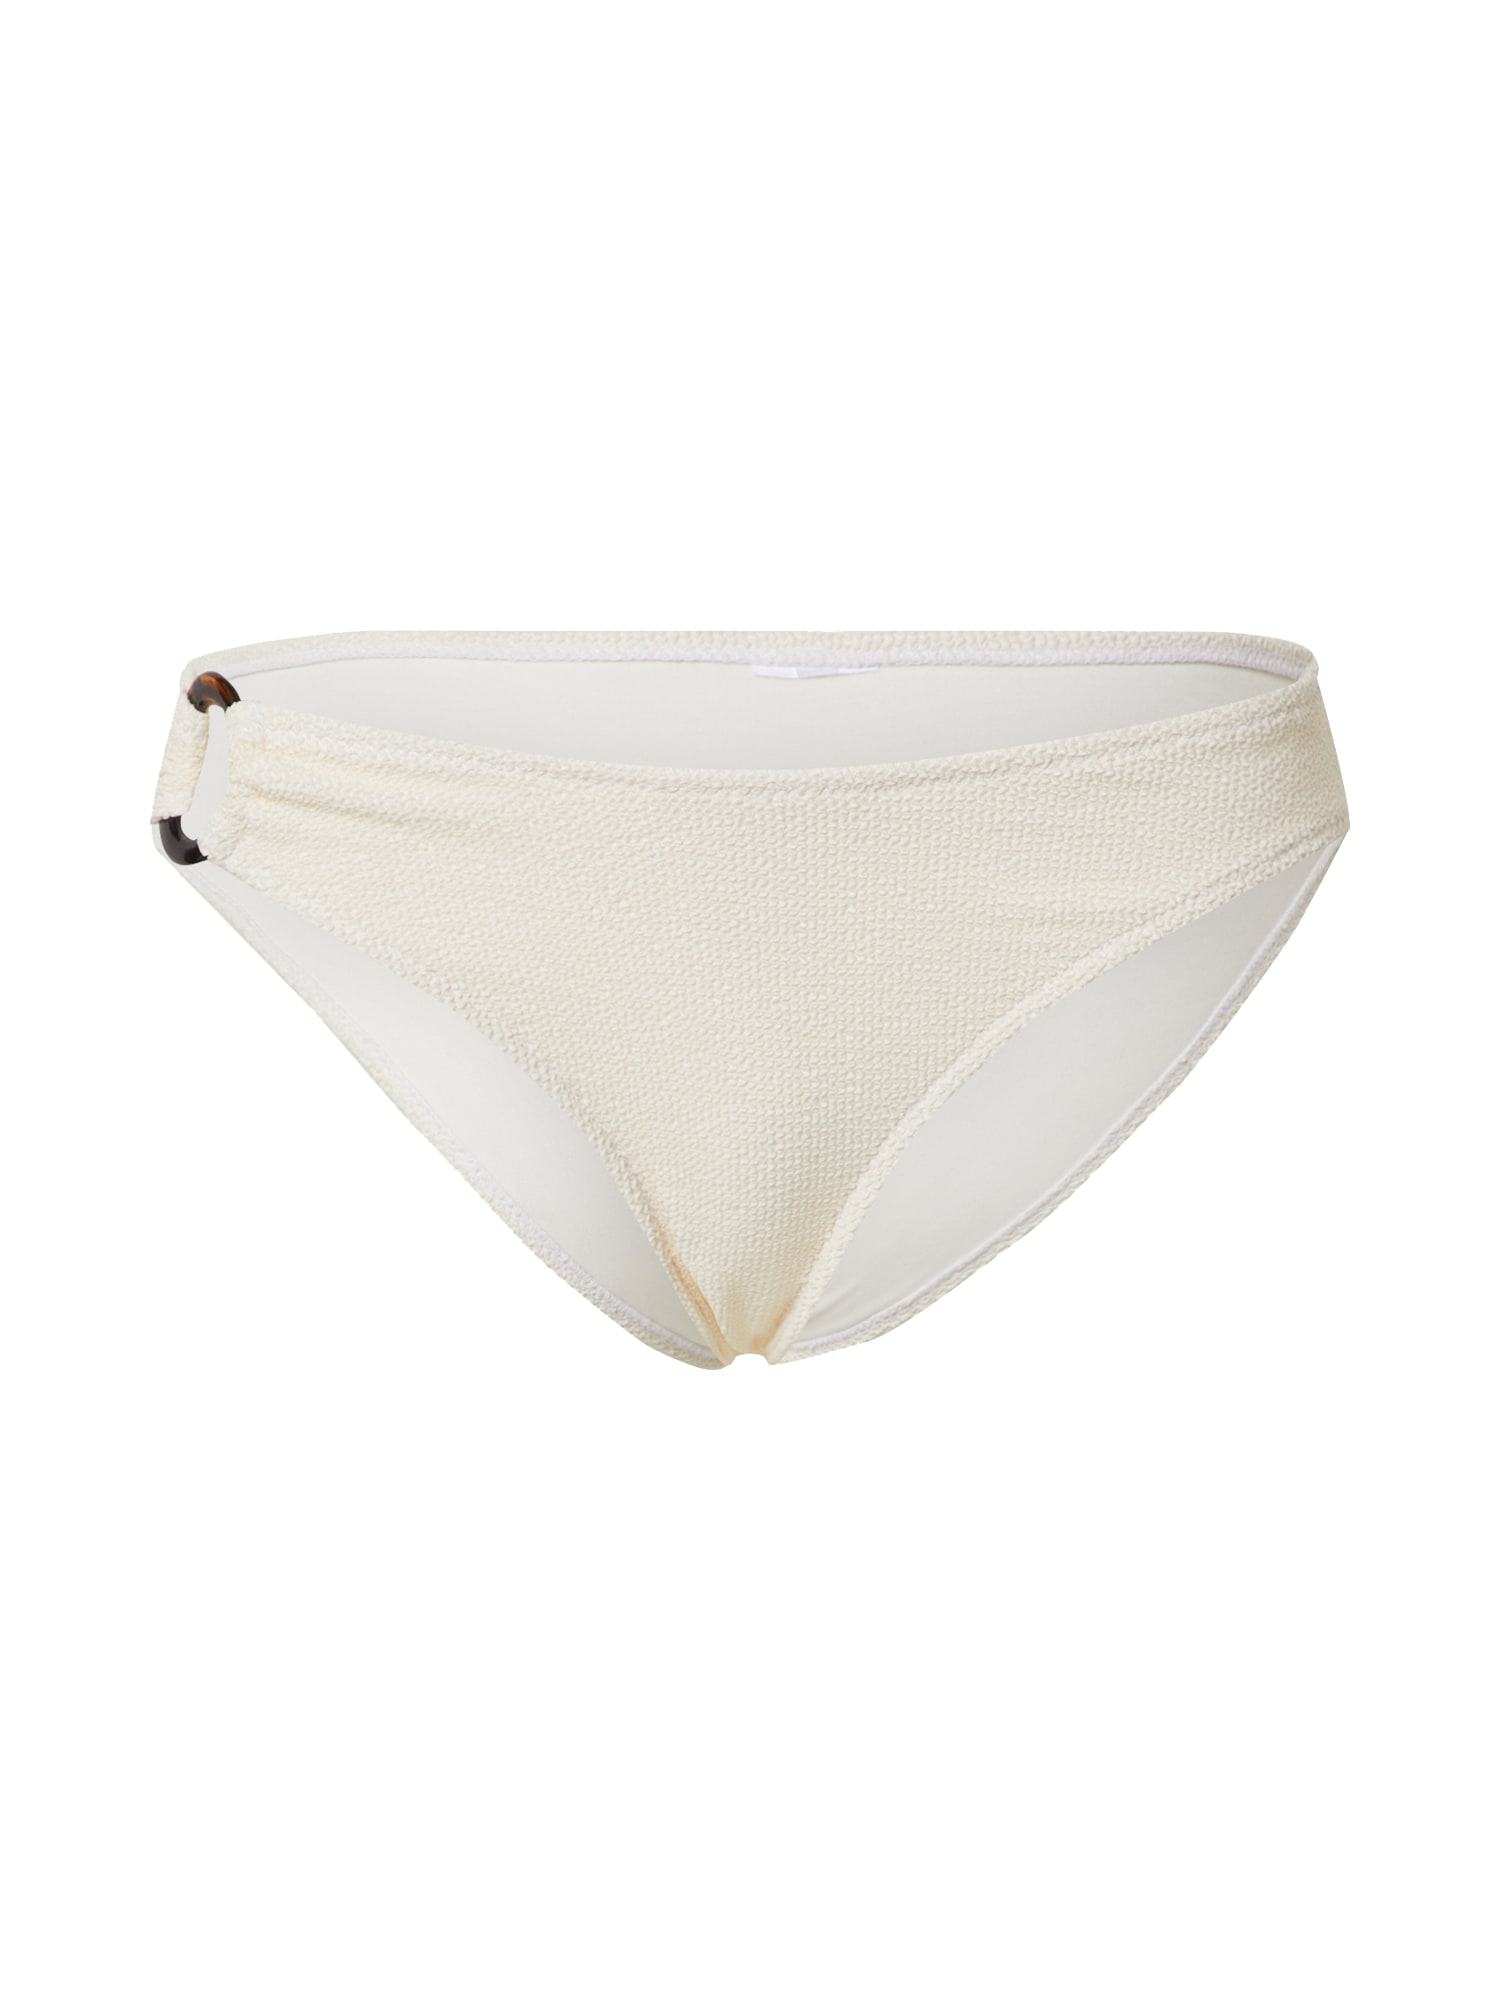 EDITED Pantaloncini per bikini 'Adelaide' Bianco, Beige